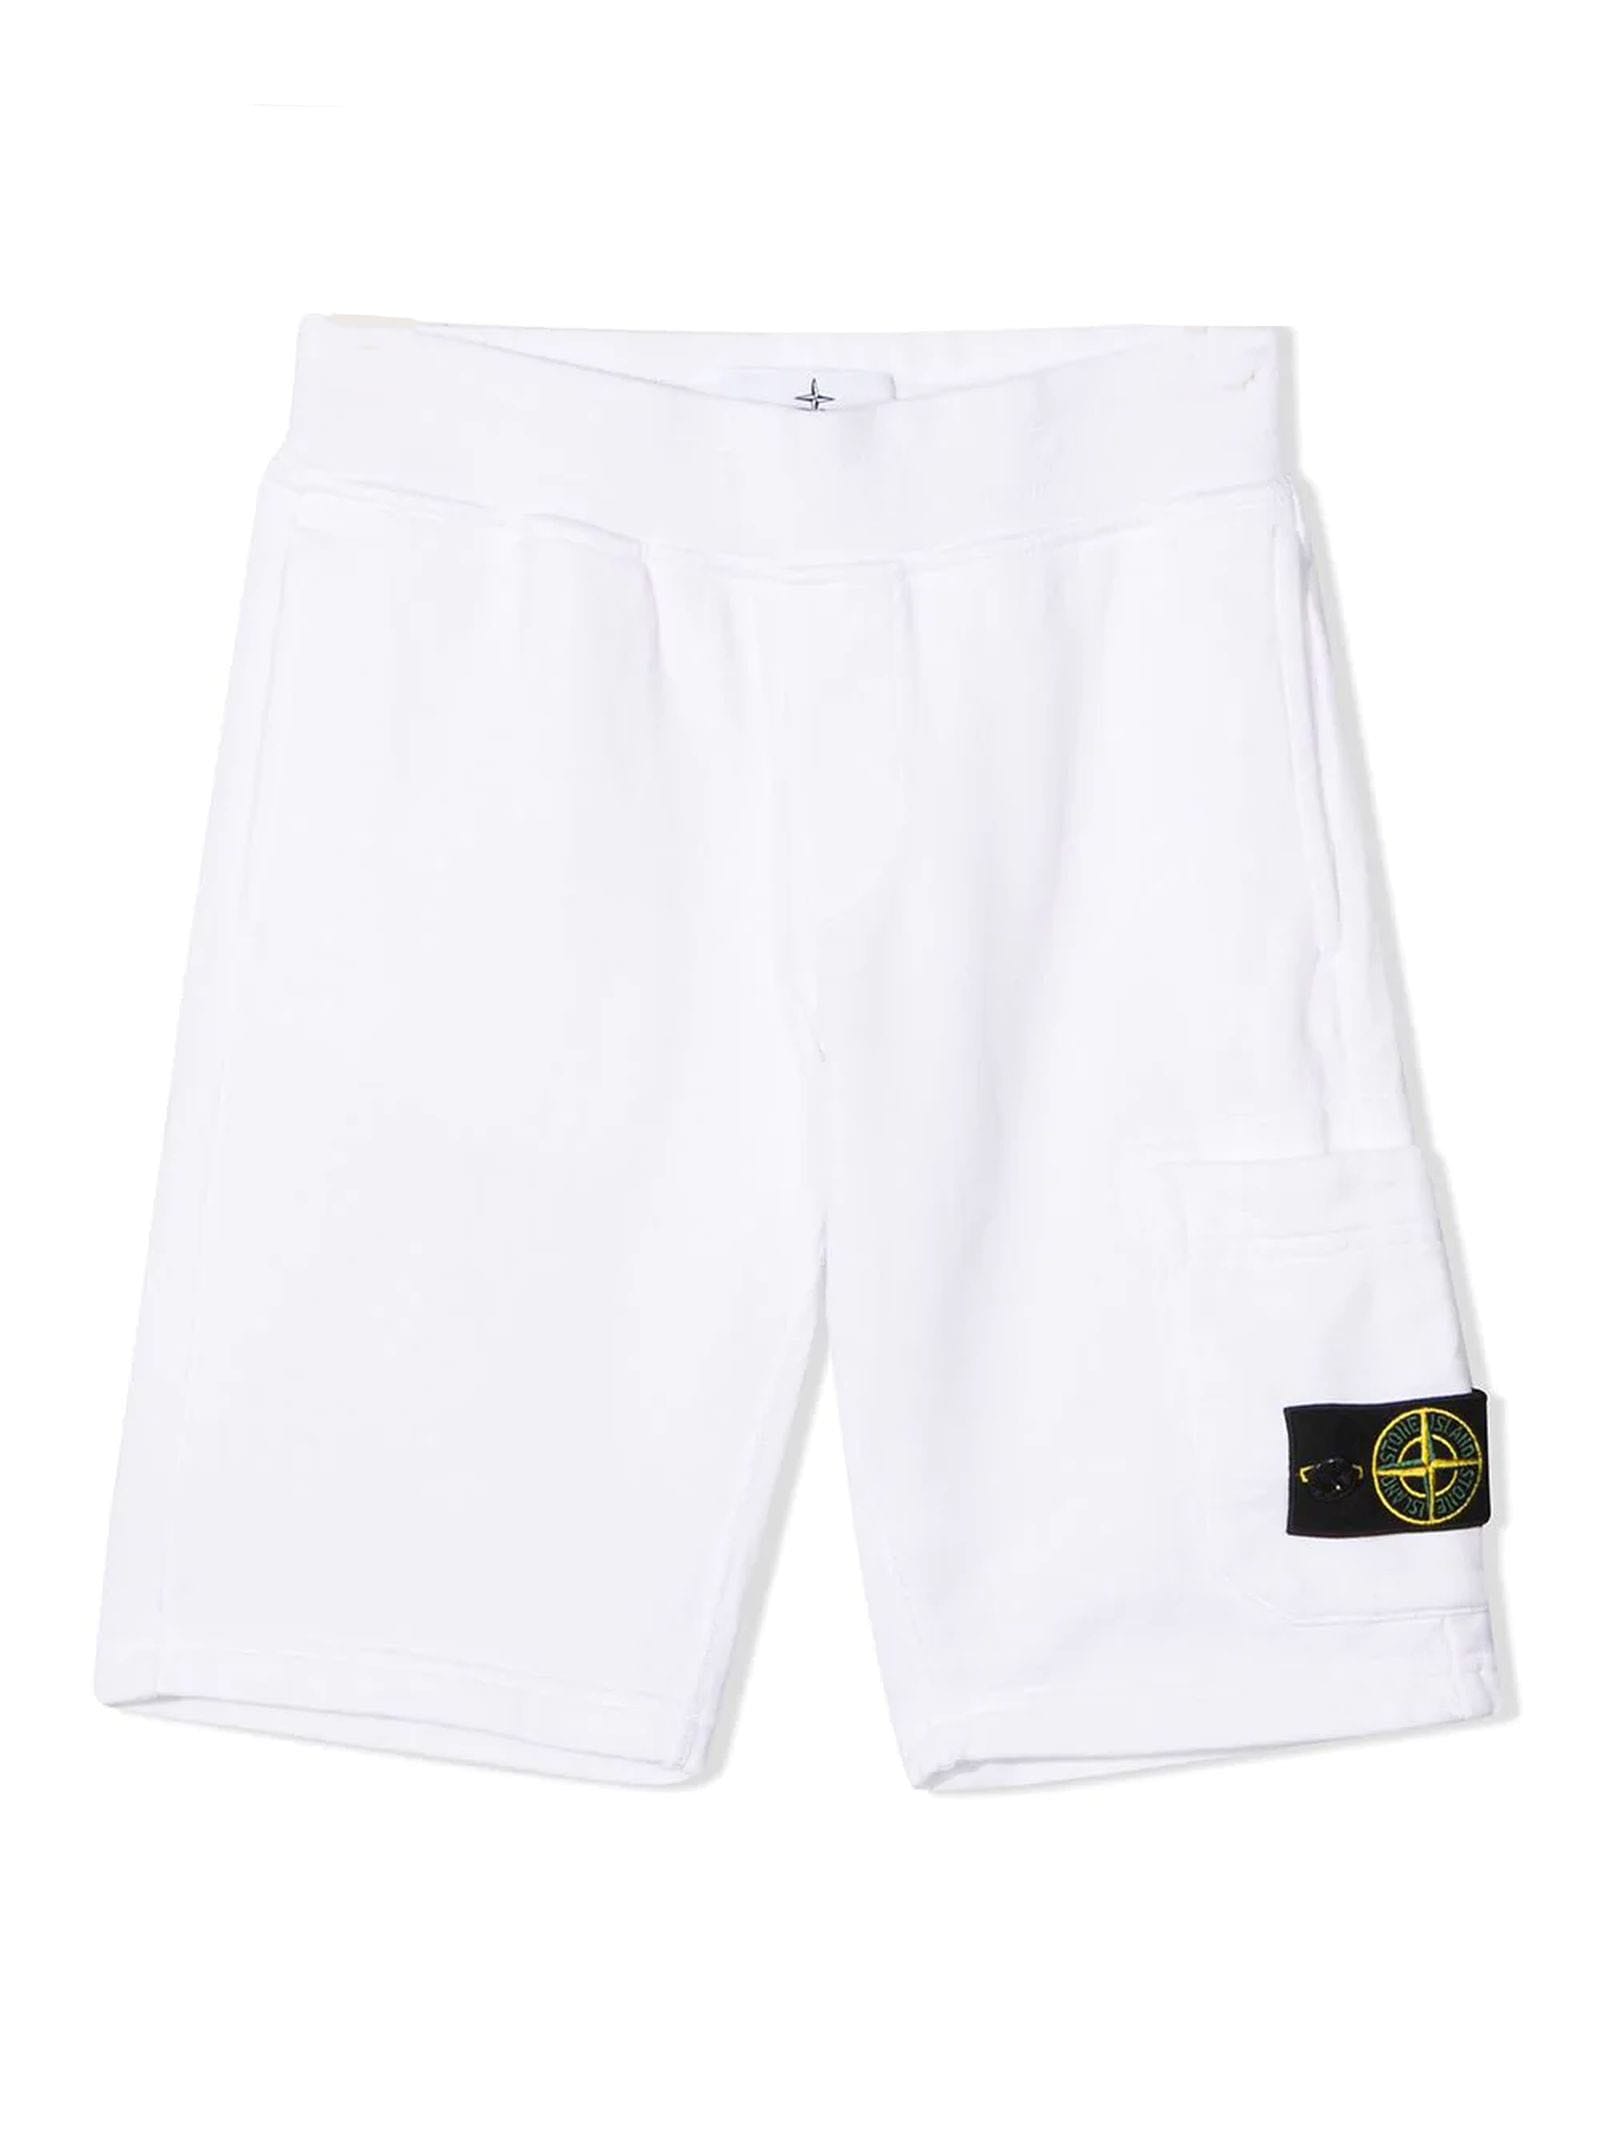 Stone Island White Cotton Shorts